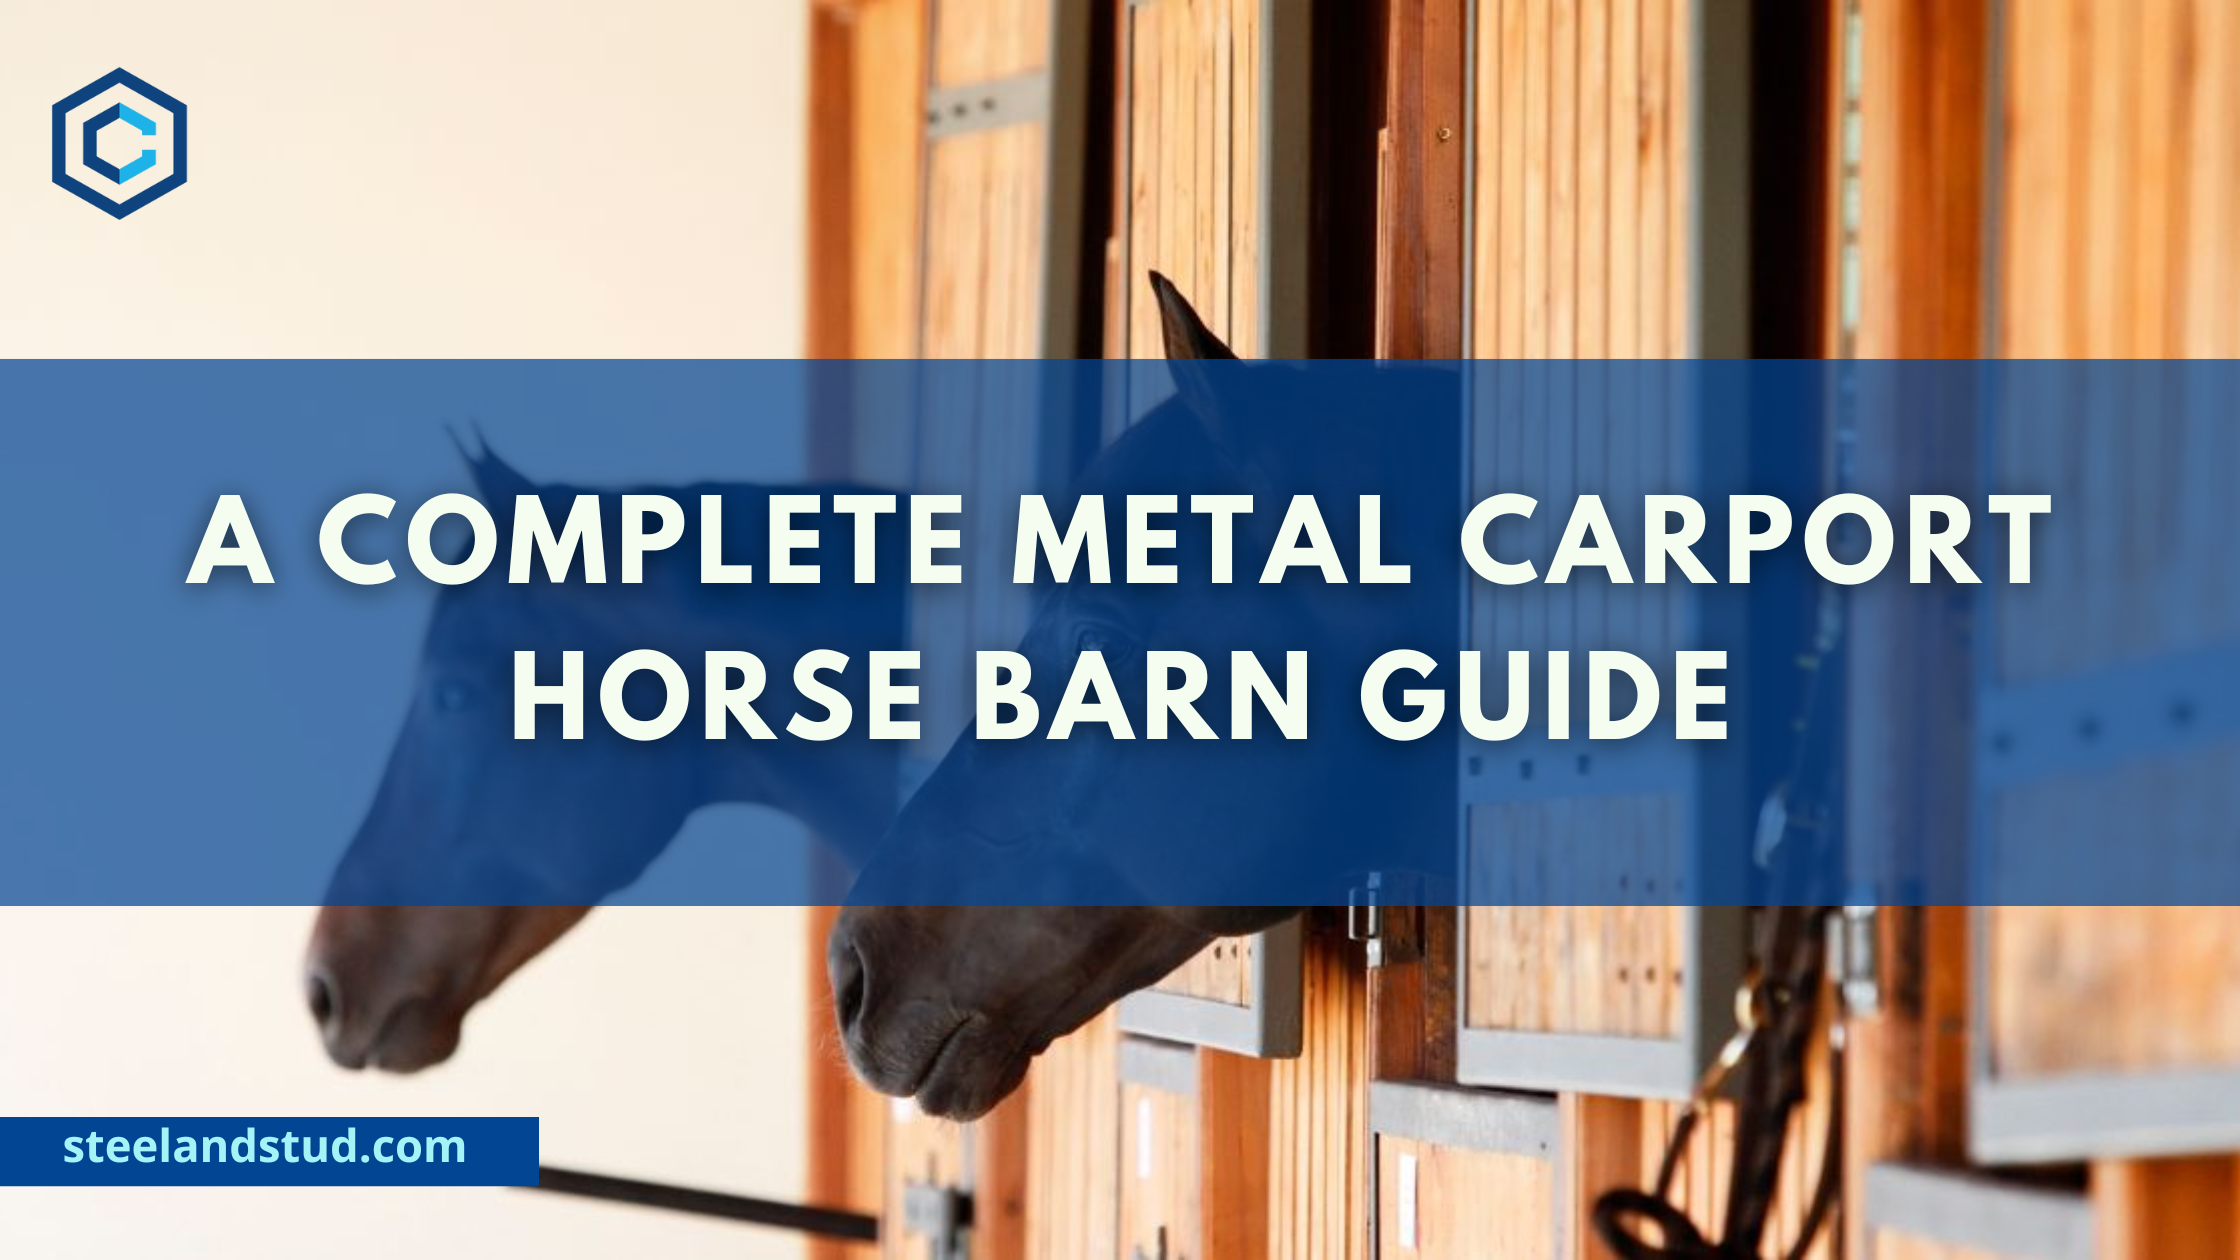 A Complete Metal Carport Horse Barn Guide